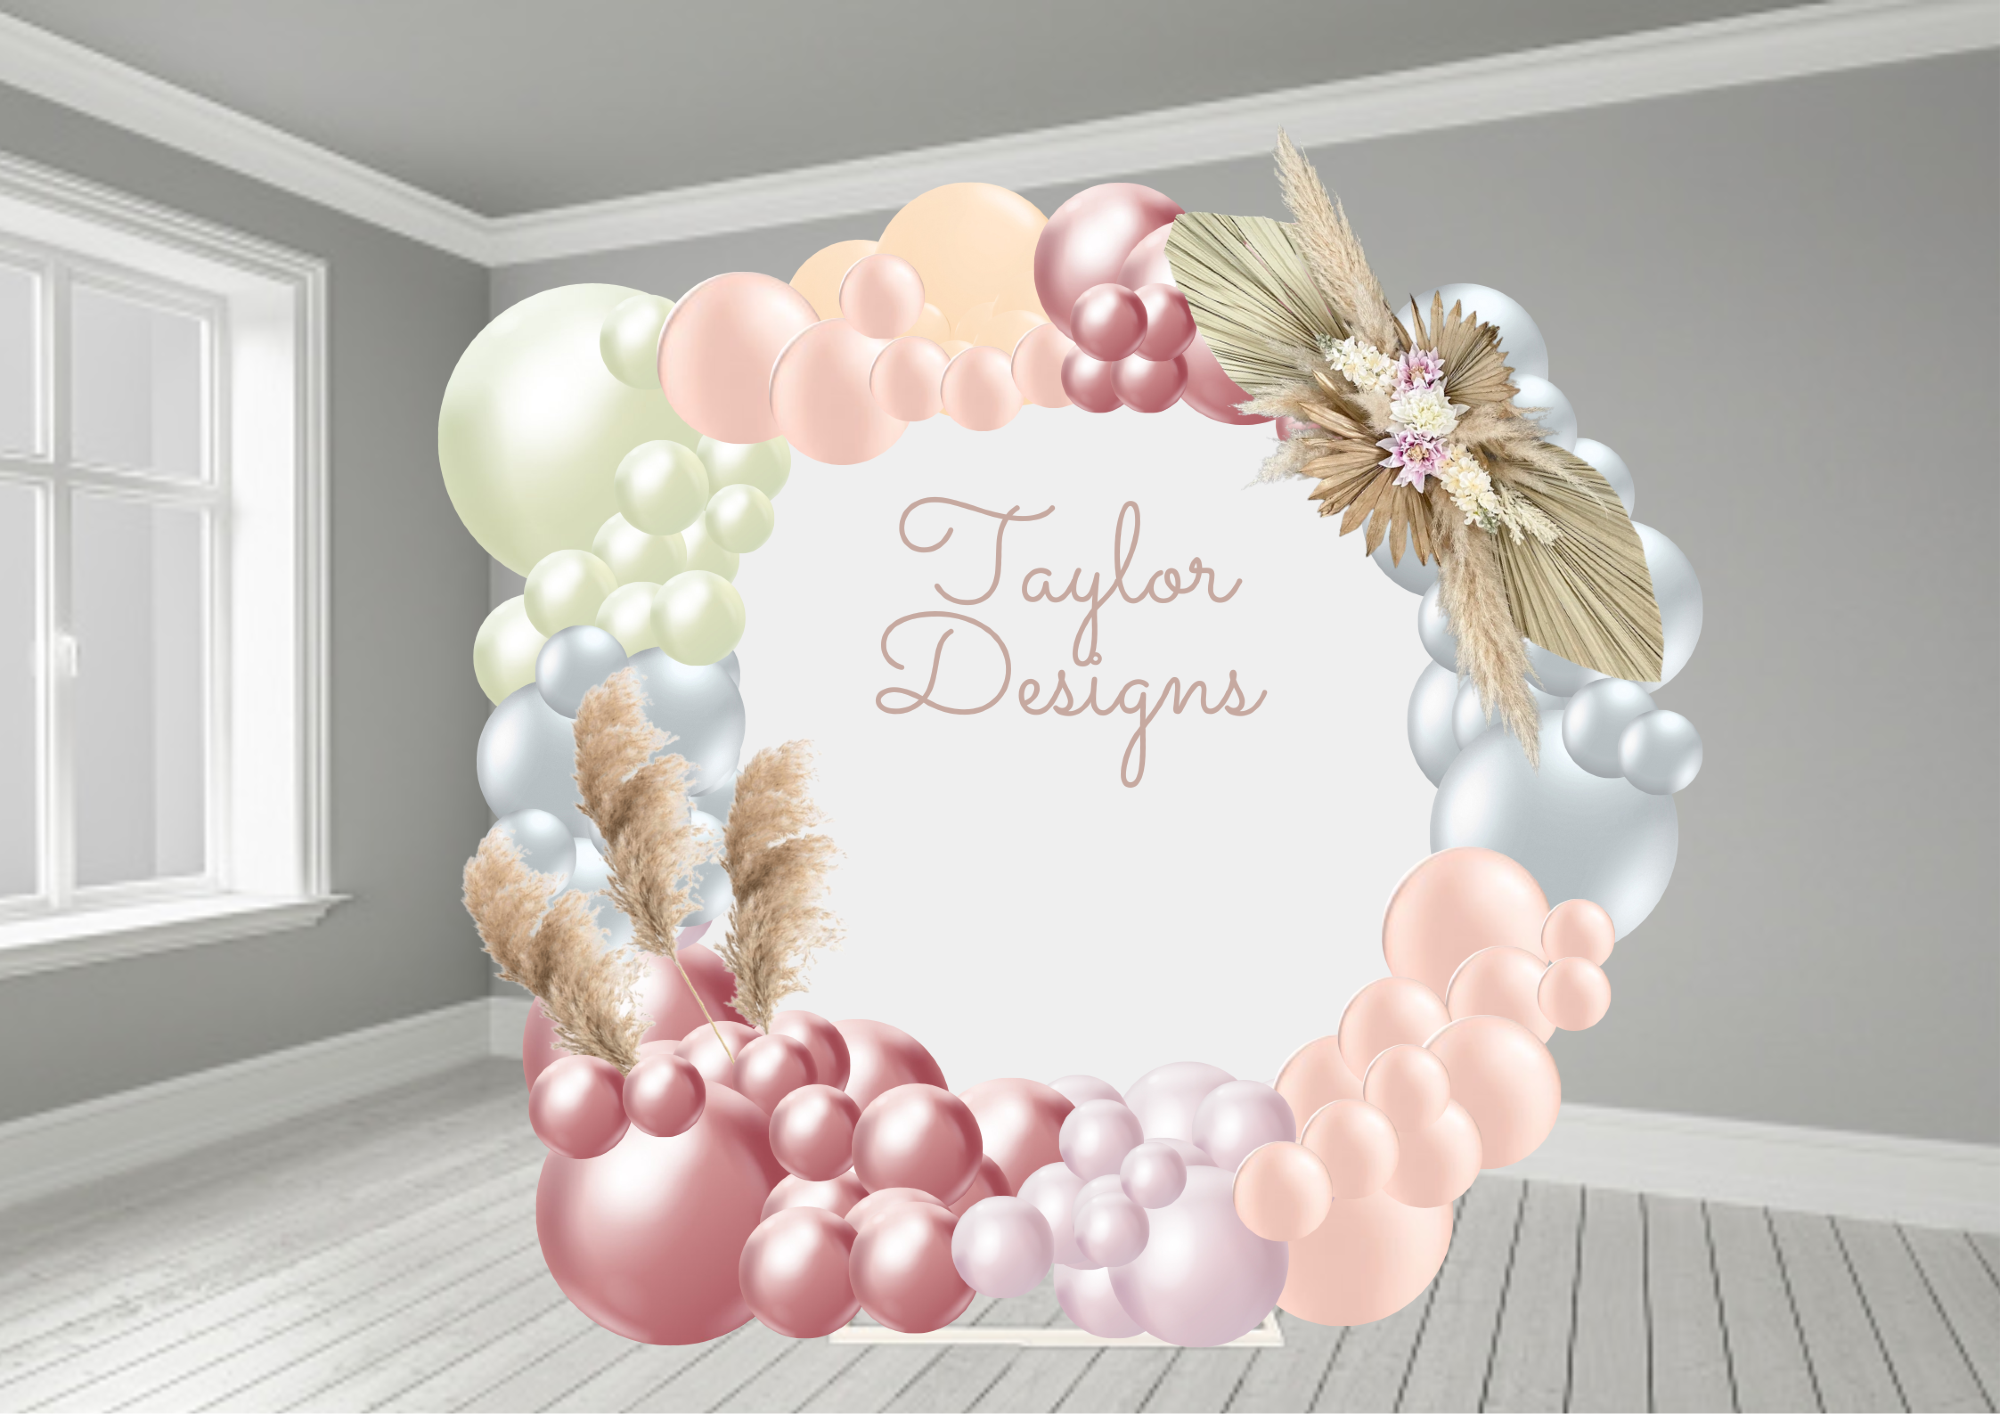 Taylor Designs | Woking | Virtual Balloon set up